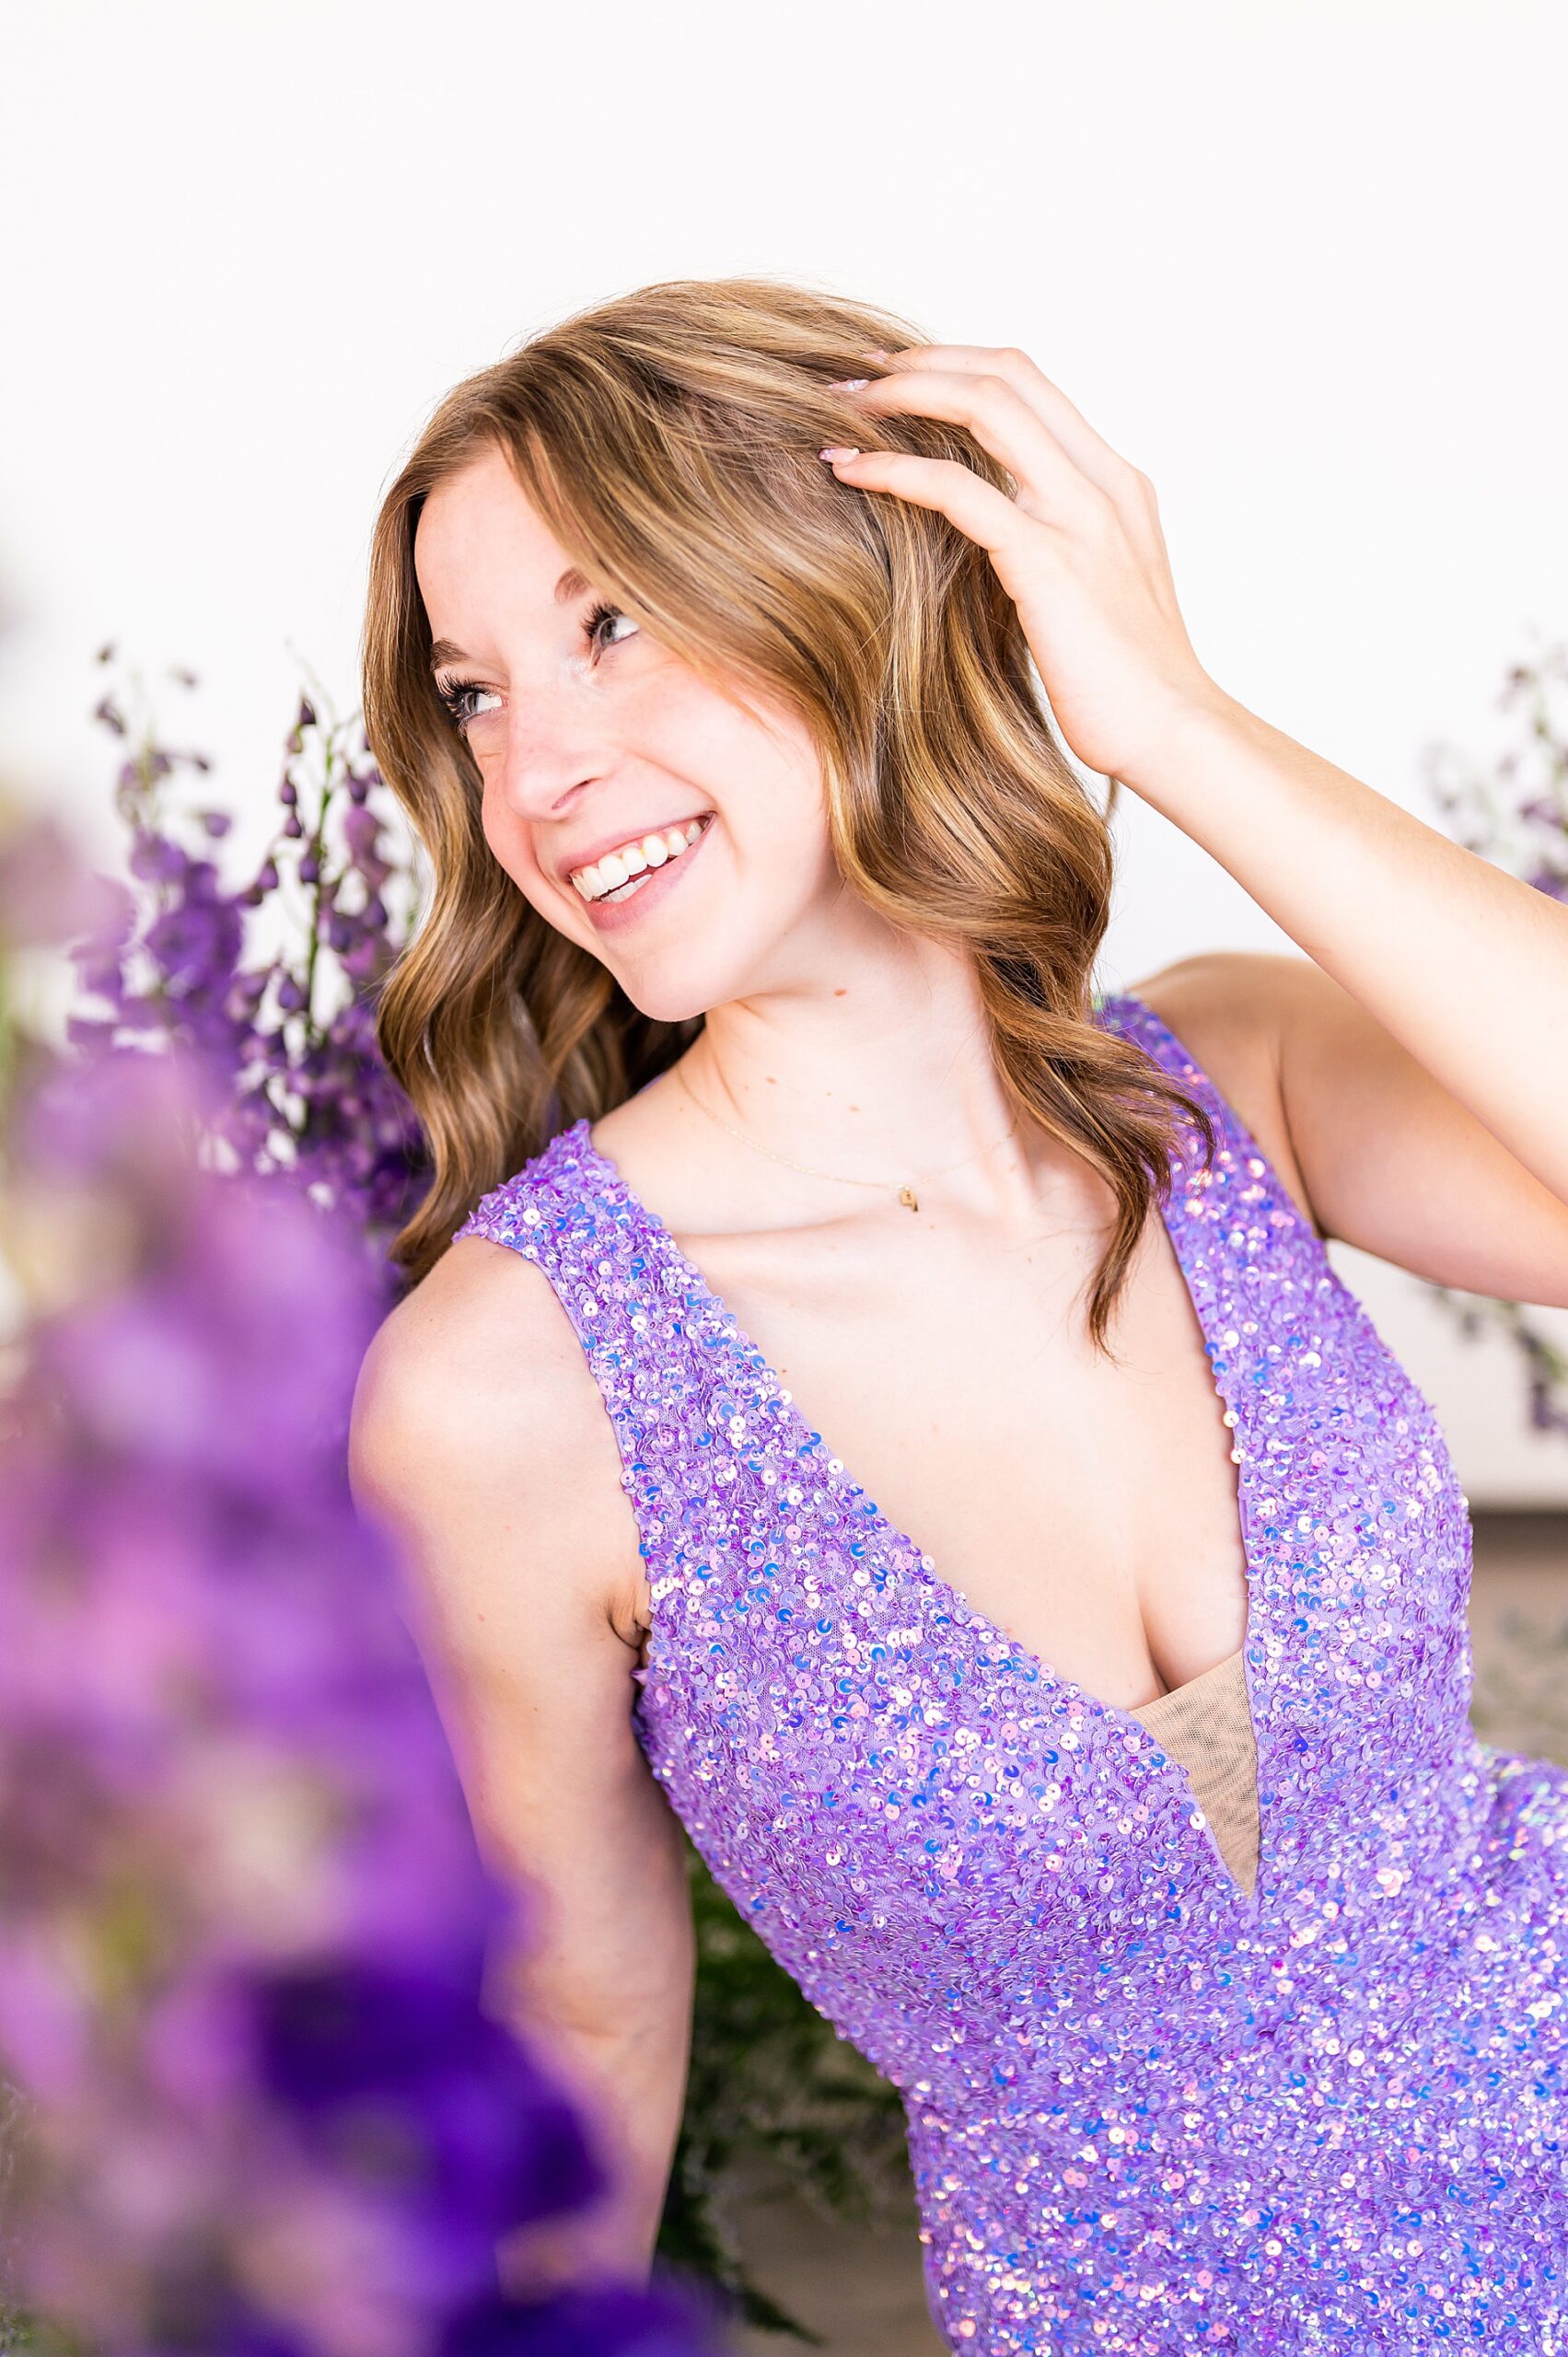 light purple glittery prom dress from Prom-themed Senior Spokesmodel Photoshoot 